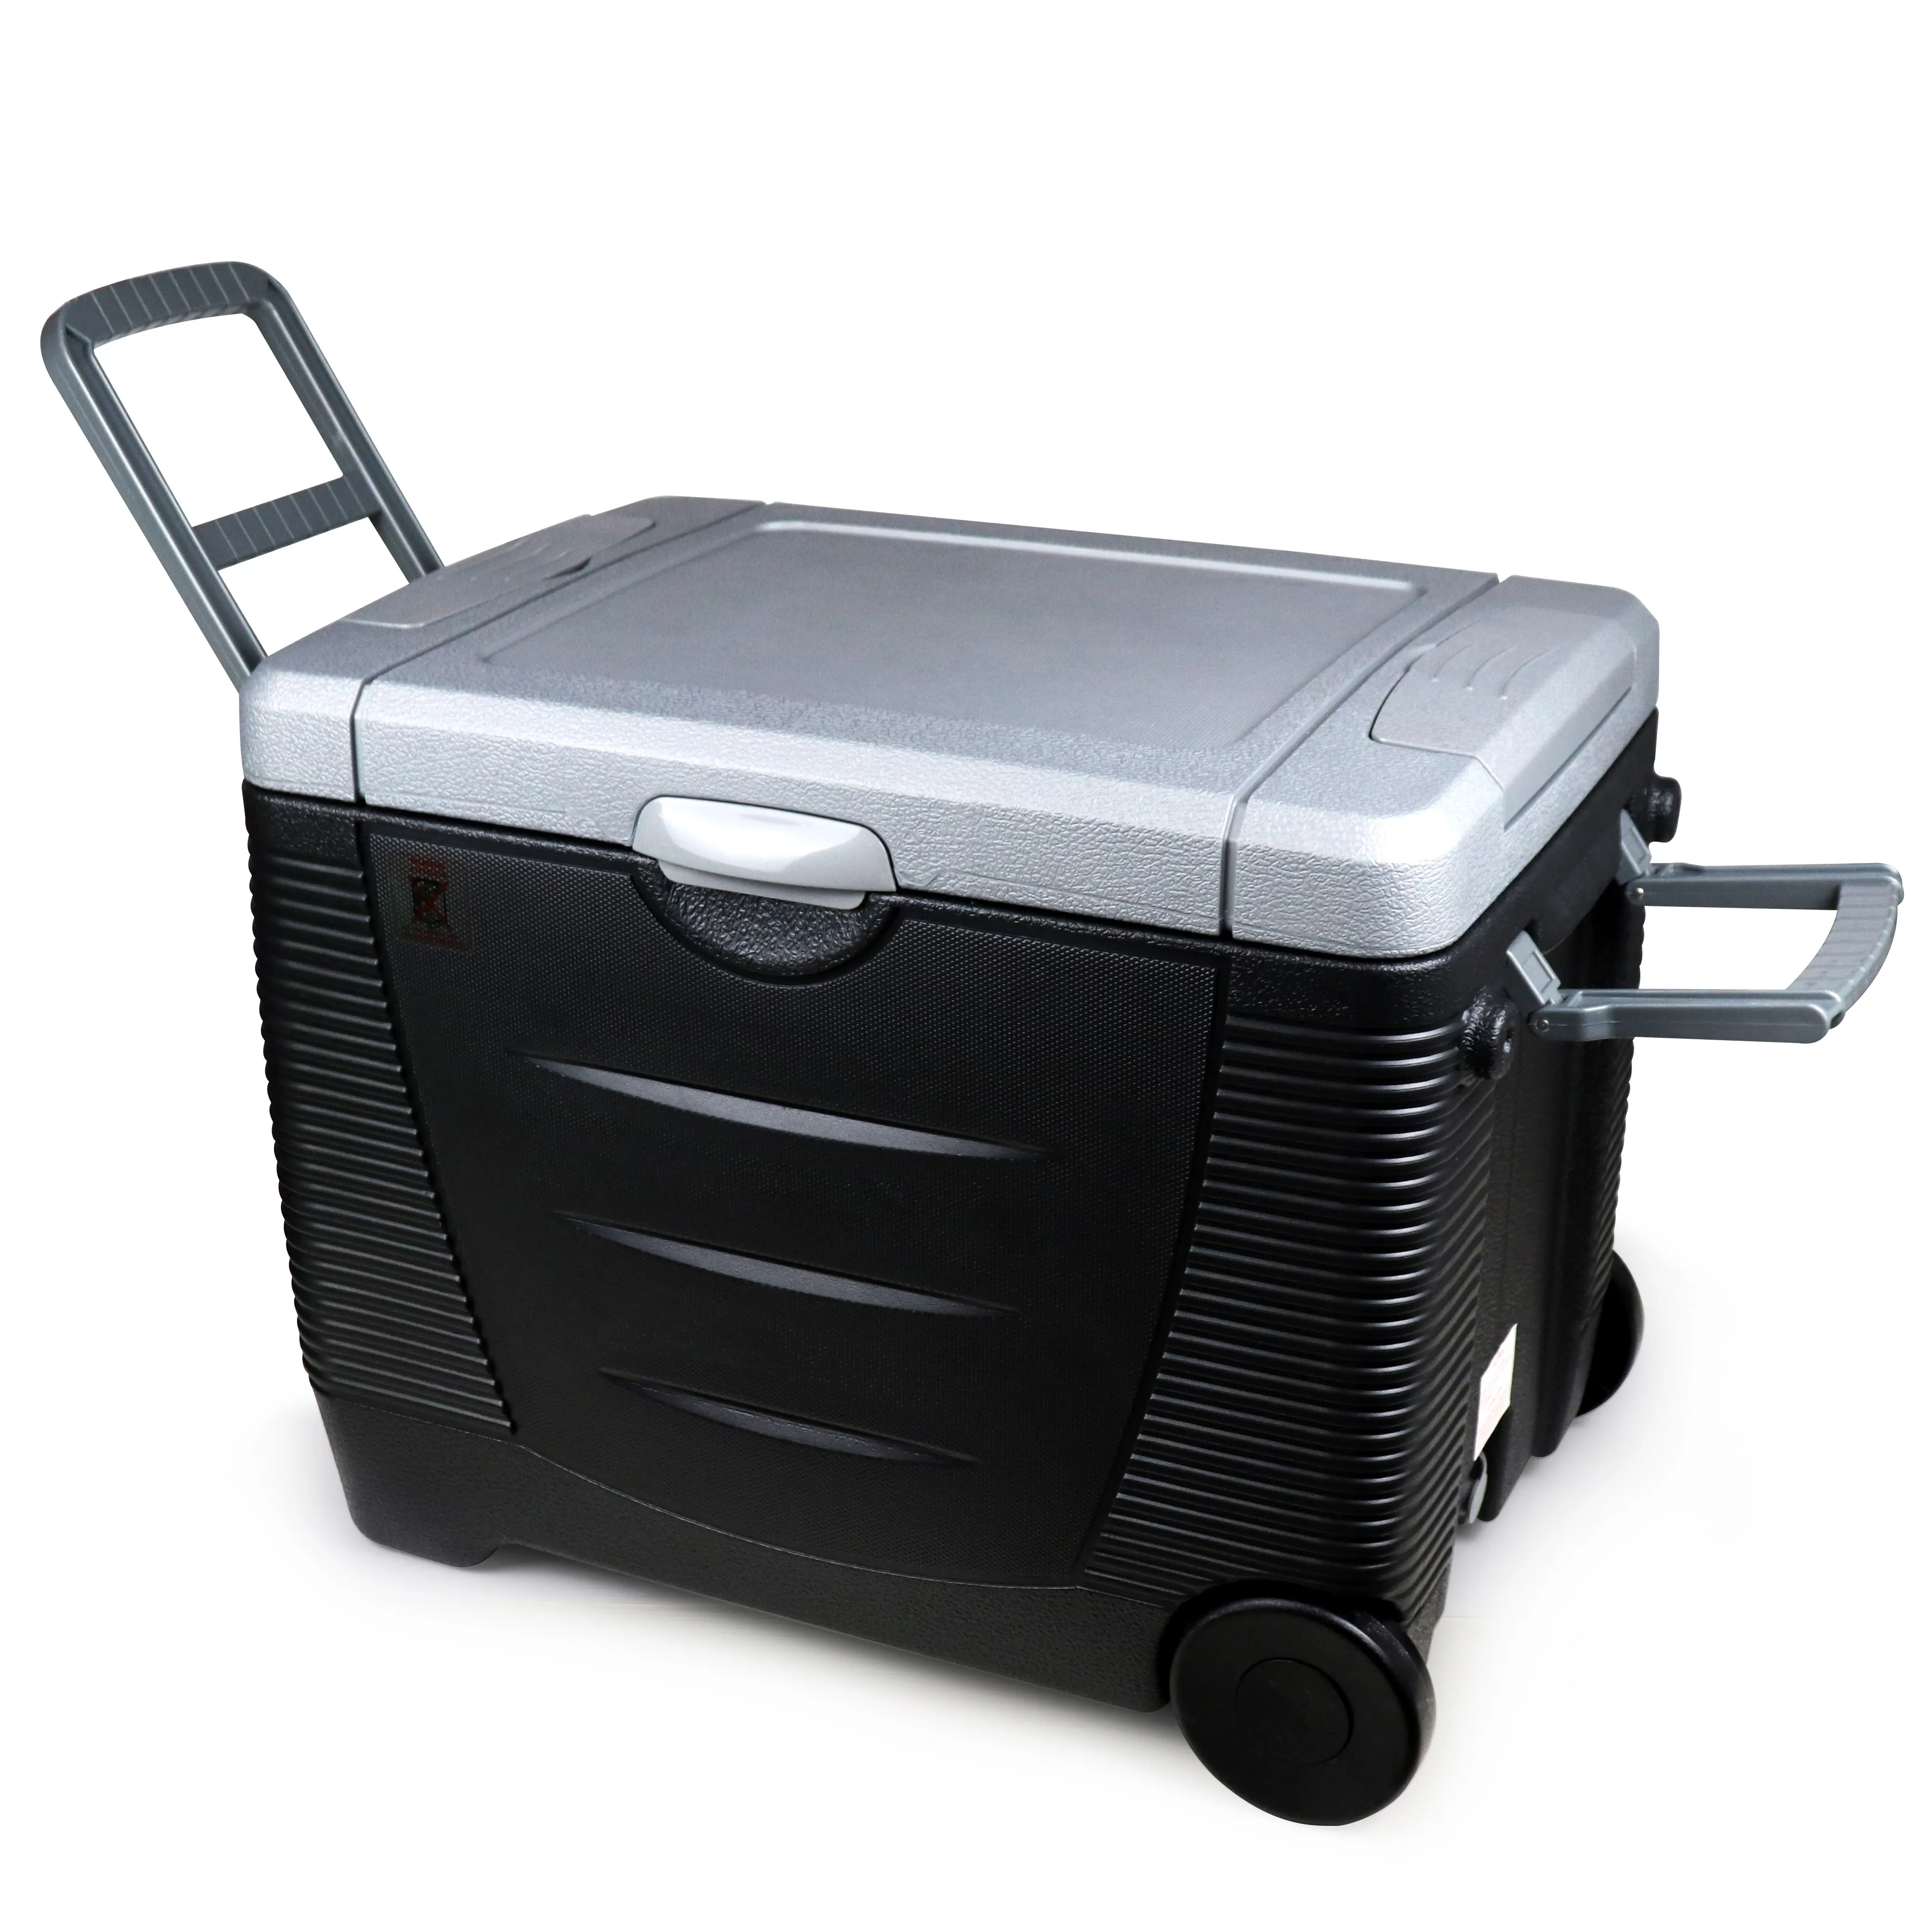 EVERCOOL-nevera portátil para coche, refrigerador compacto para vehículo termoeléctrico, 12v, 45L